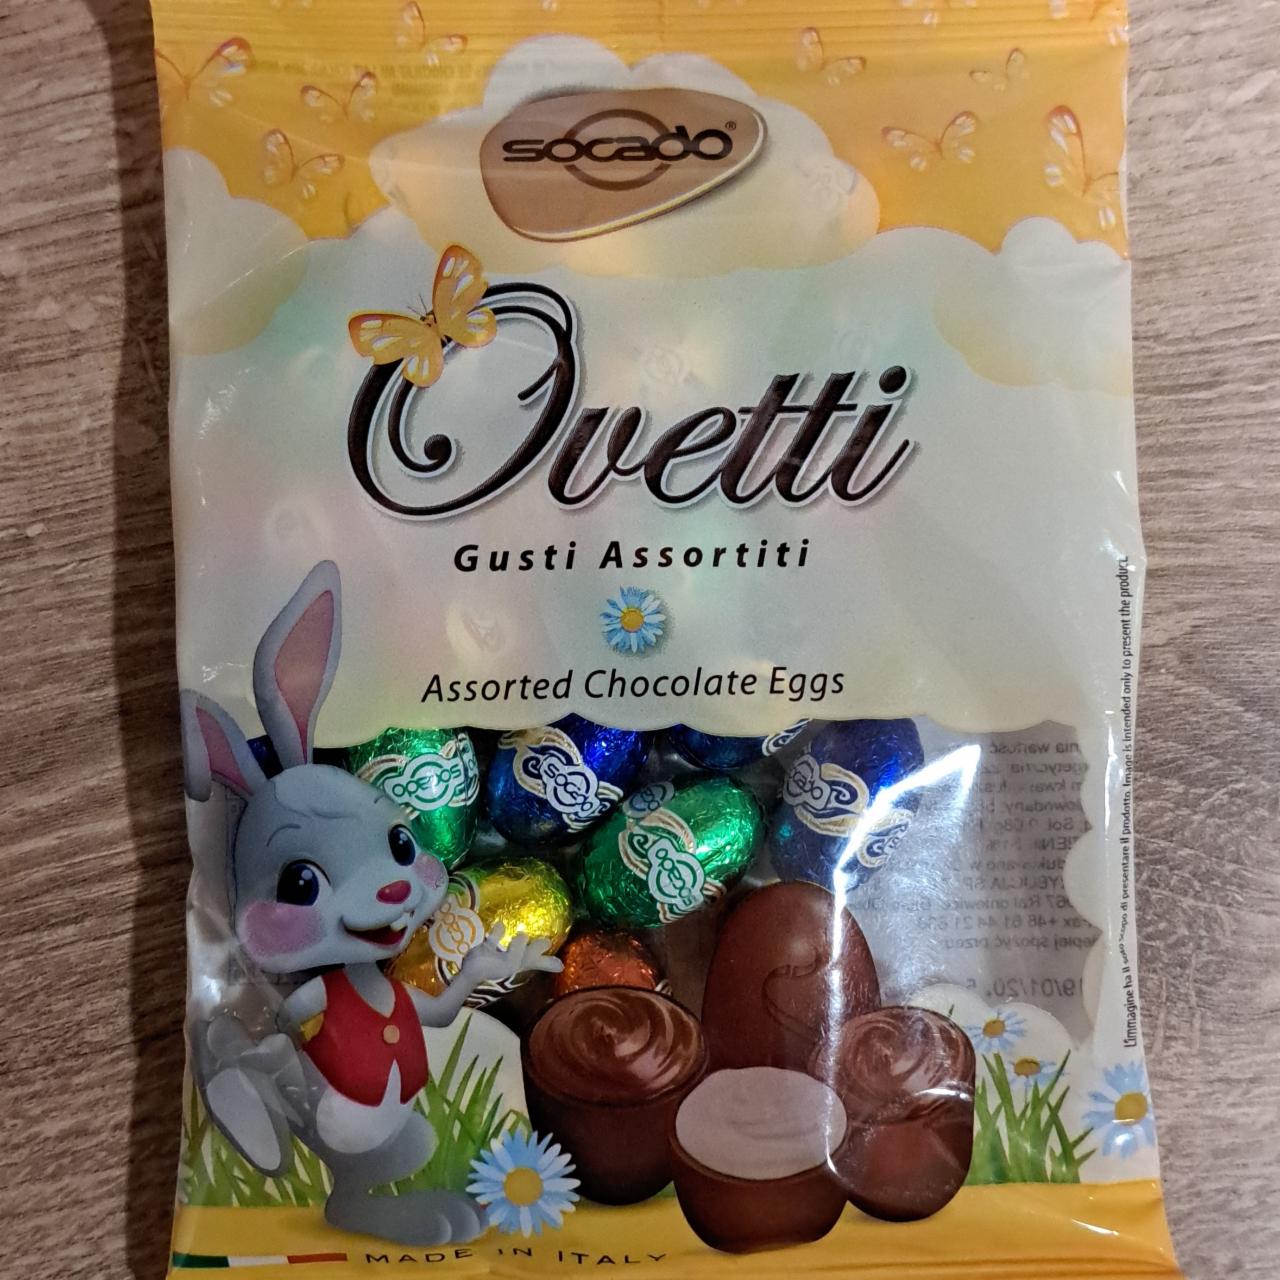 Fotografie - Ovetti Gusti Assortiti Assorted Chocolate Eggs Socado